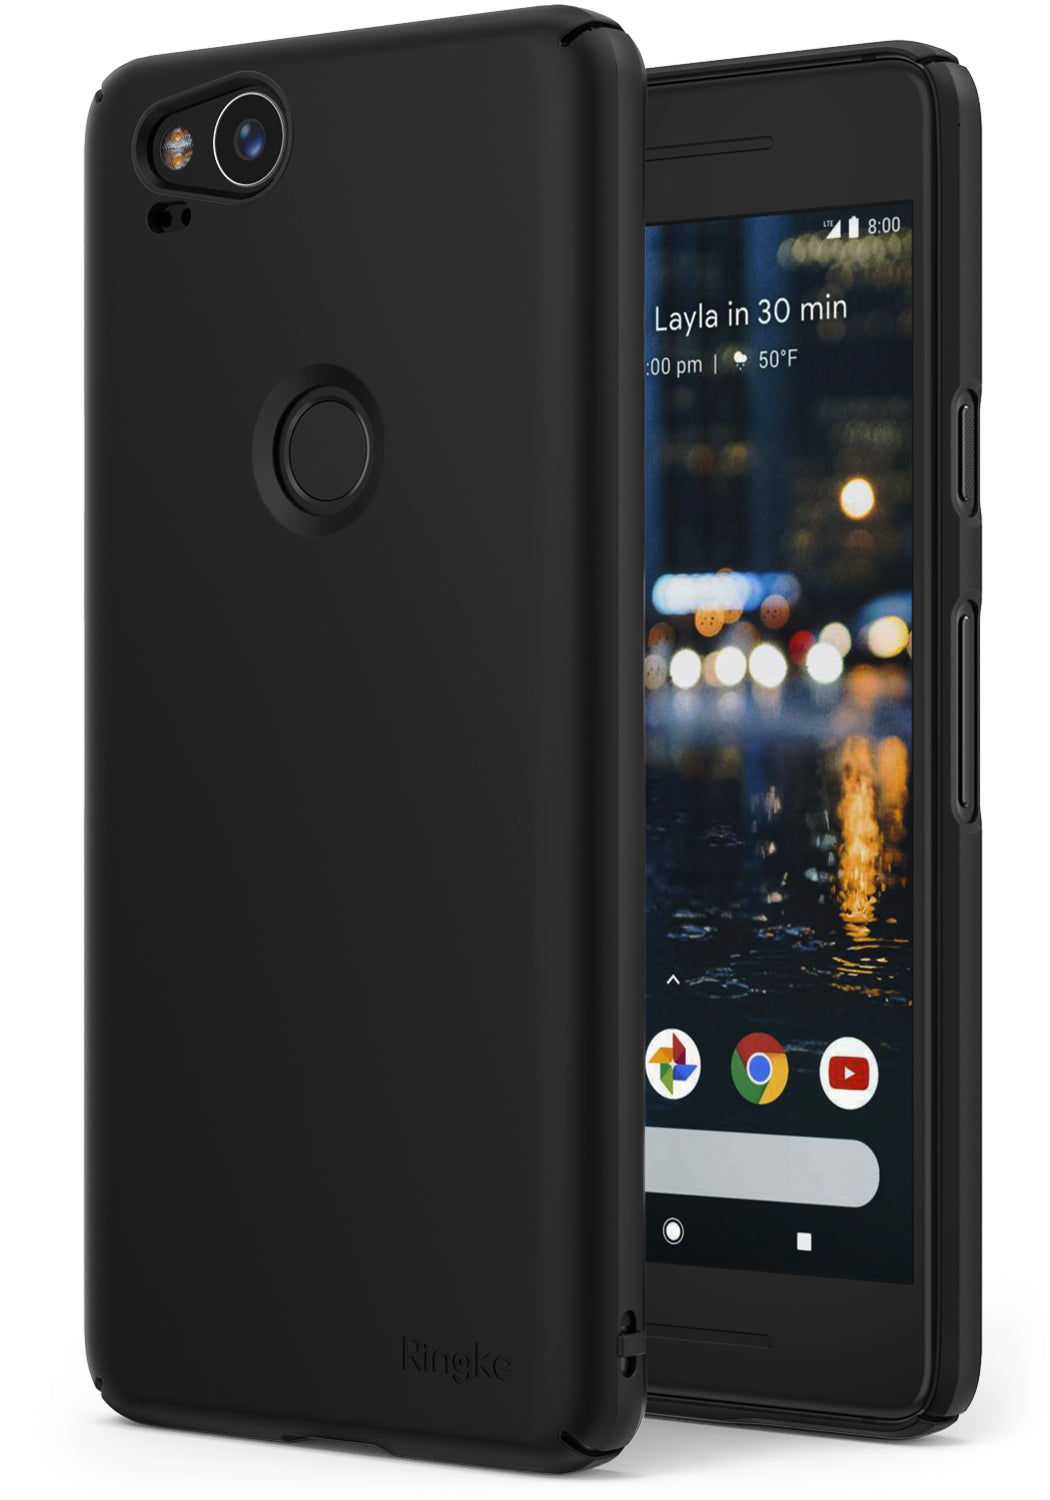 ringke slim premium hard pc back case cover for google pixel 2 main black